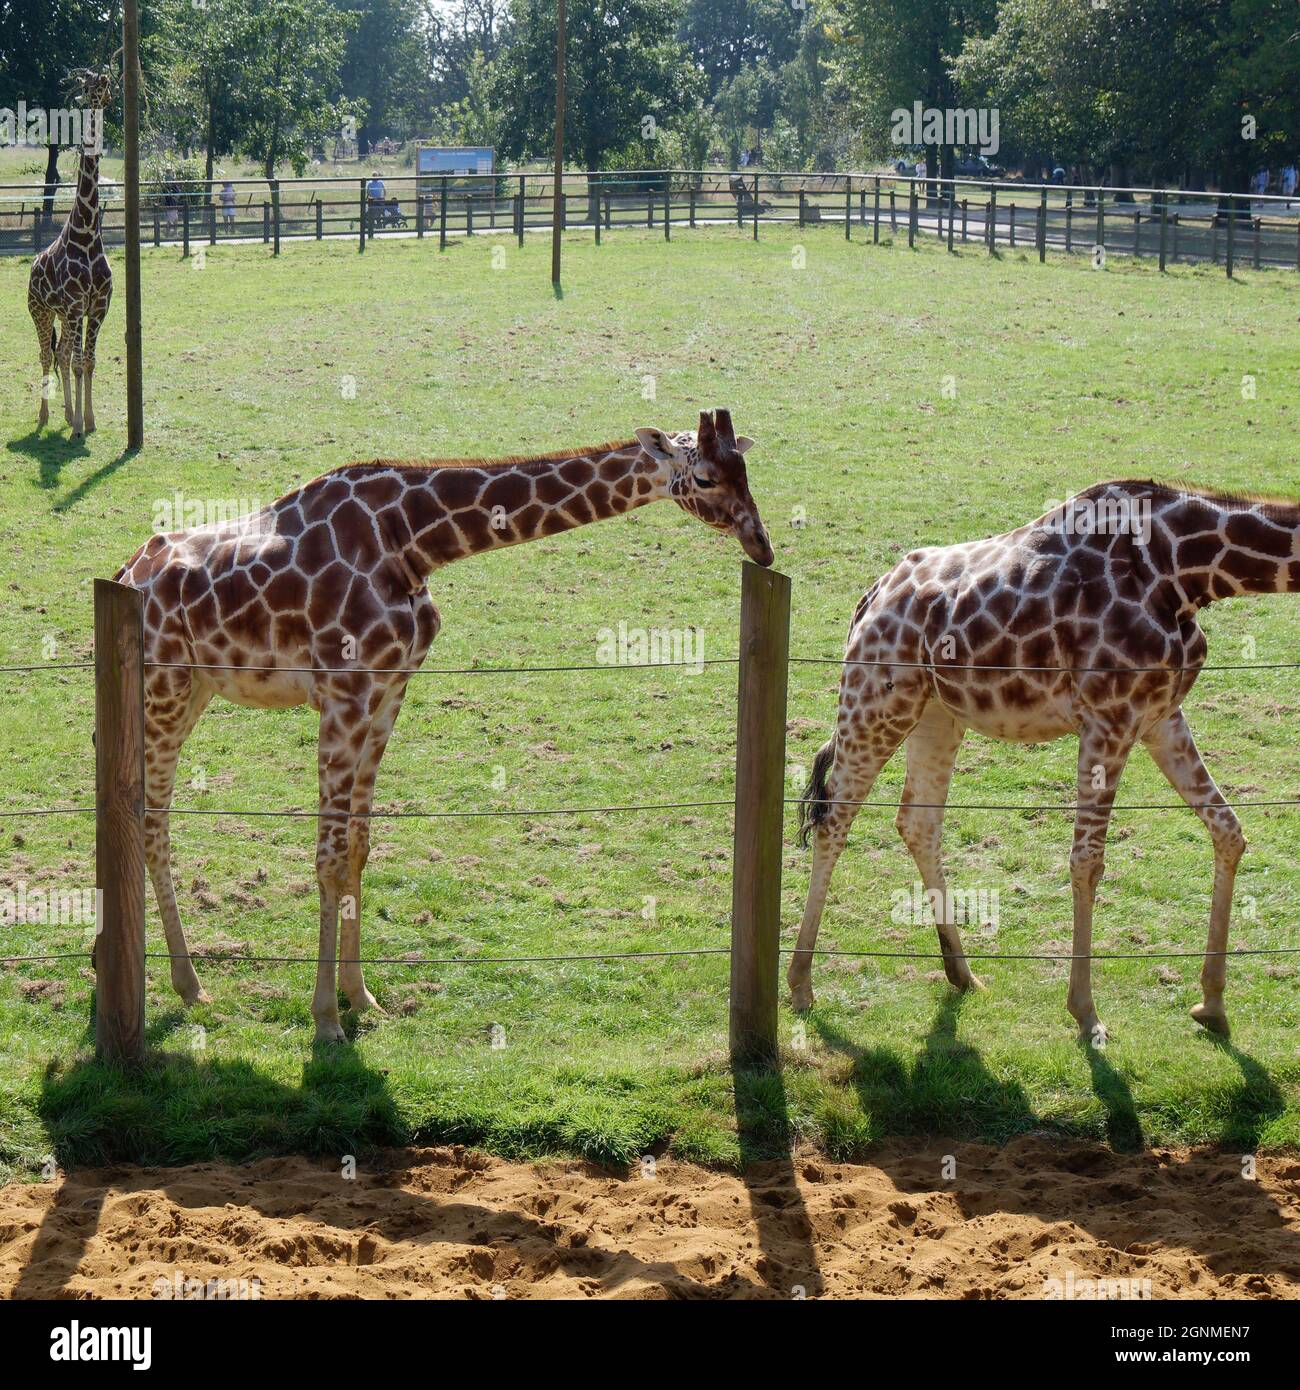 Giraffes at Whipsnade Zoo Stock Photo